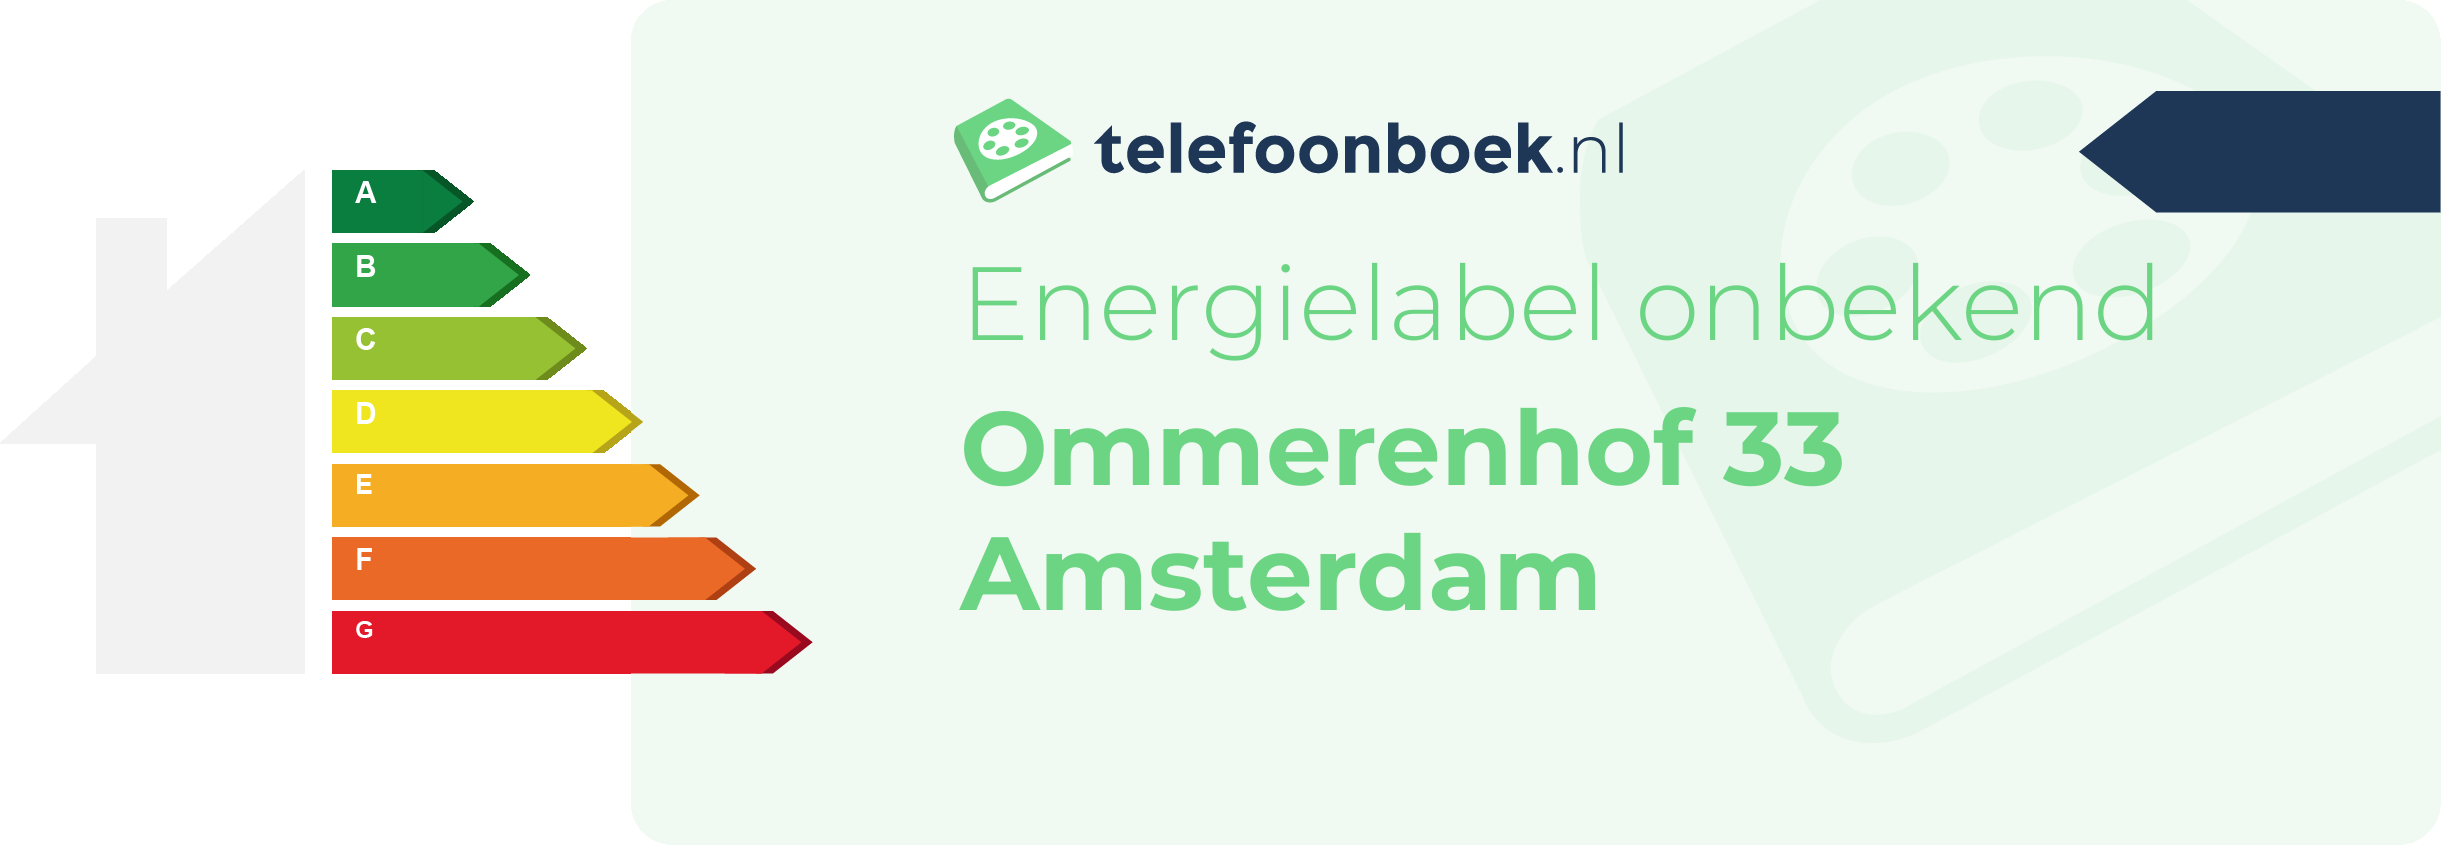 Energielabel Ommerenhof 33 Amsterdam